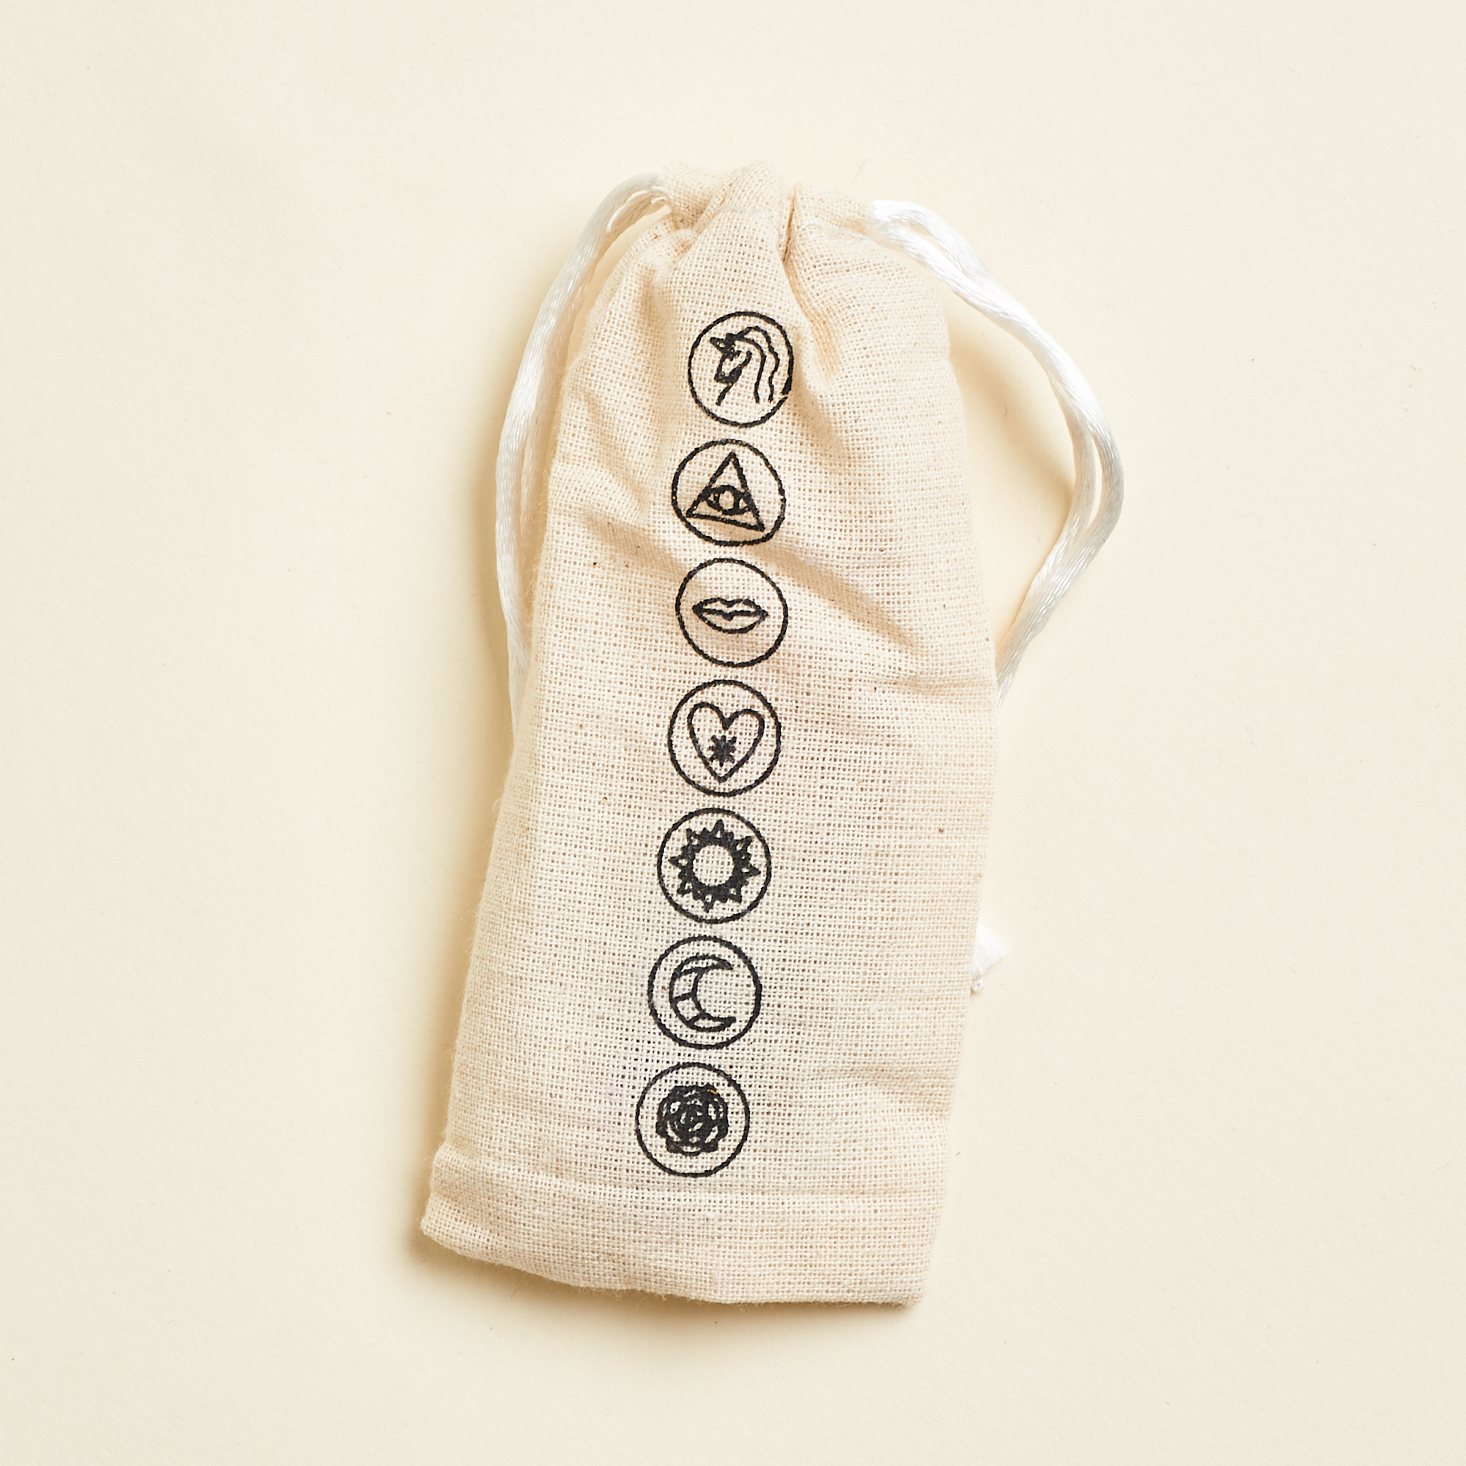 woven bag with chakra symbolism